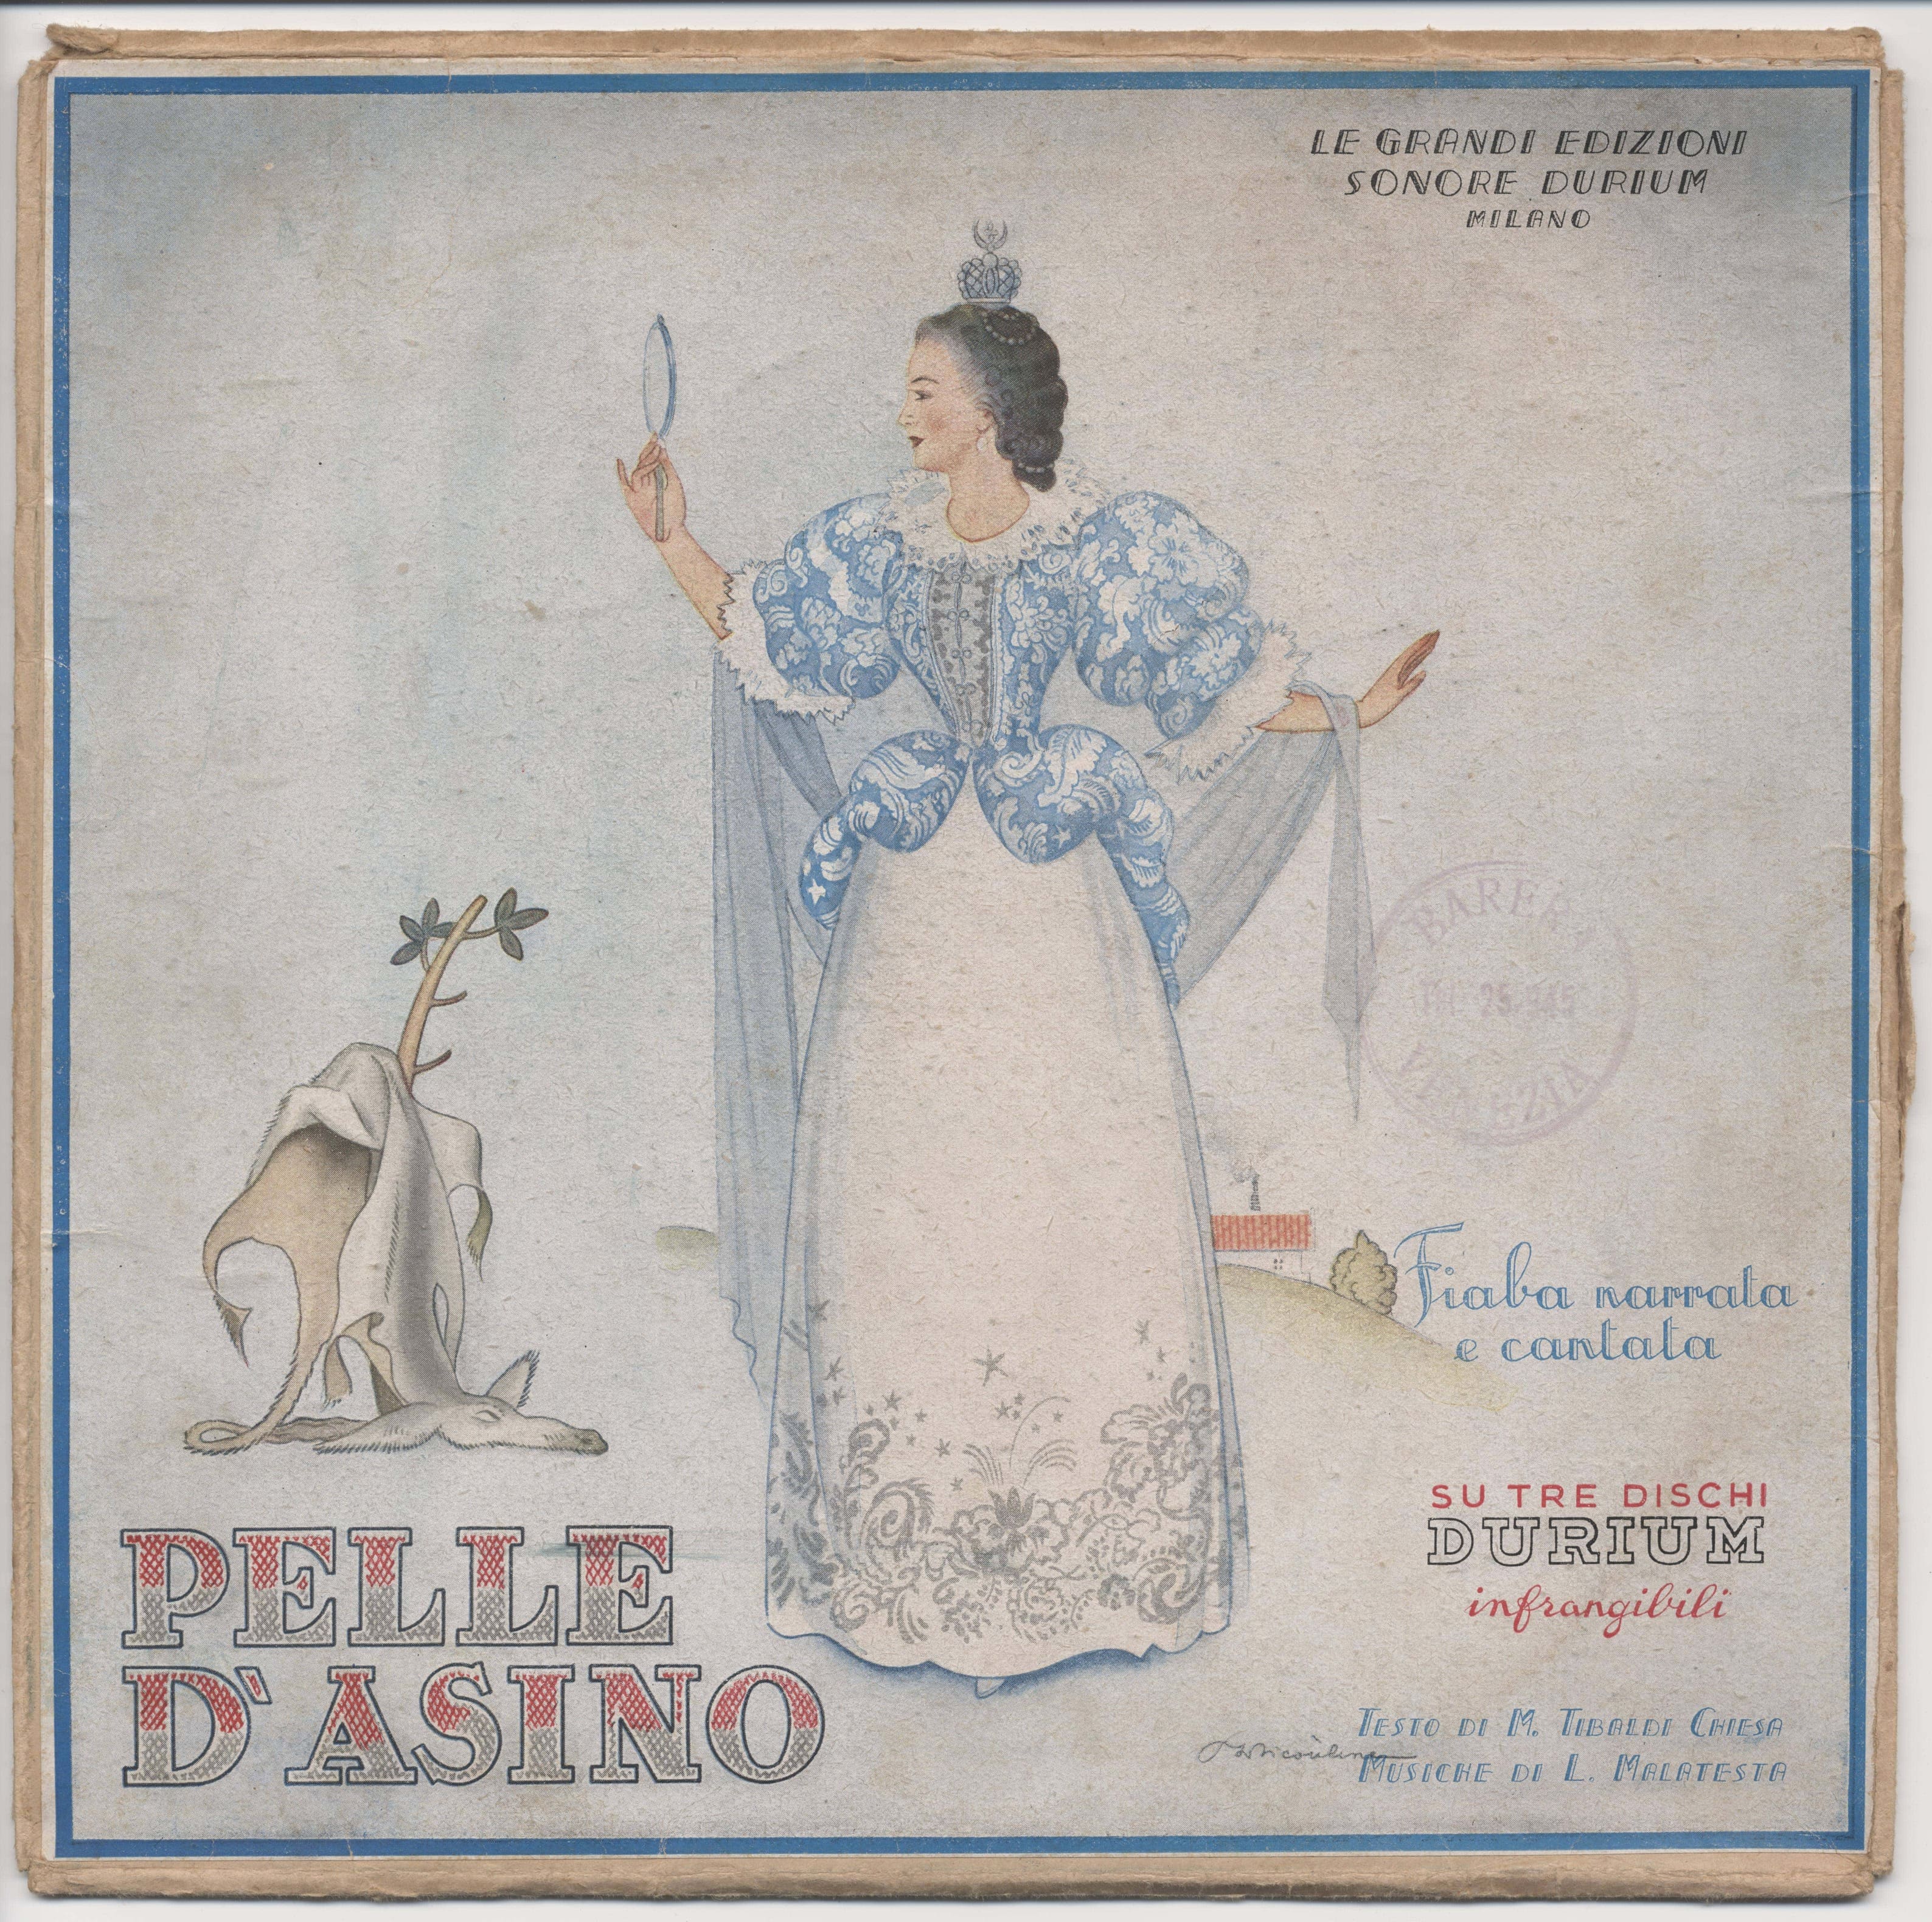 raccolta di dischi, fiaba "Pelle d'Asino", accessori ludici (1933)